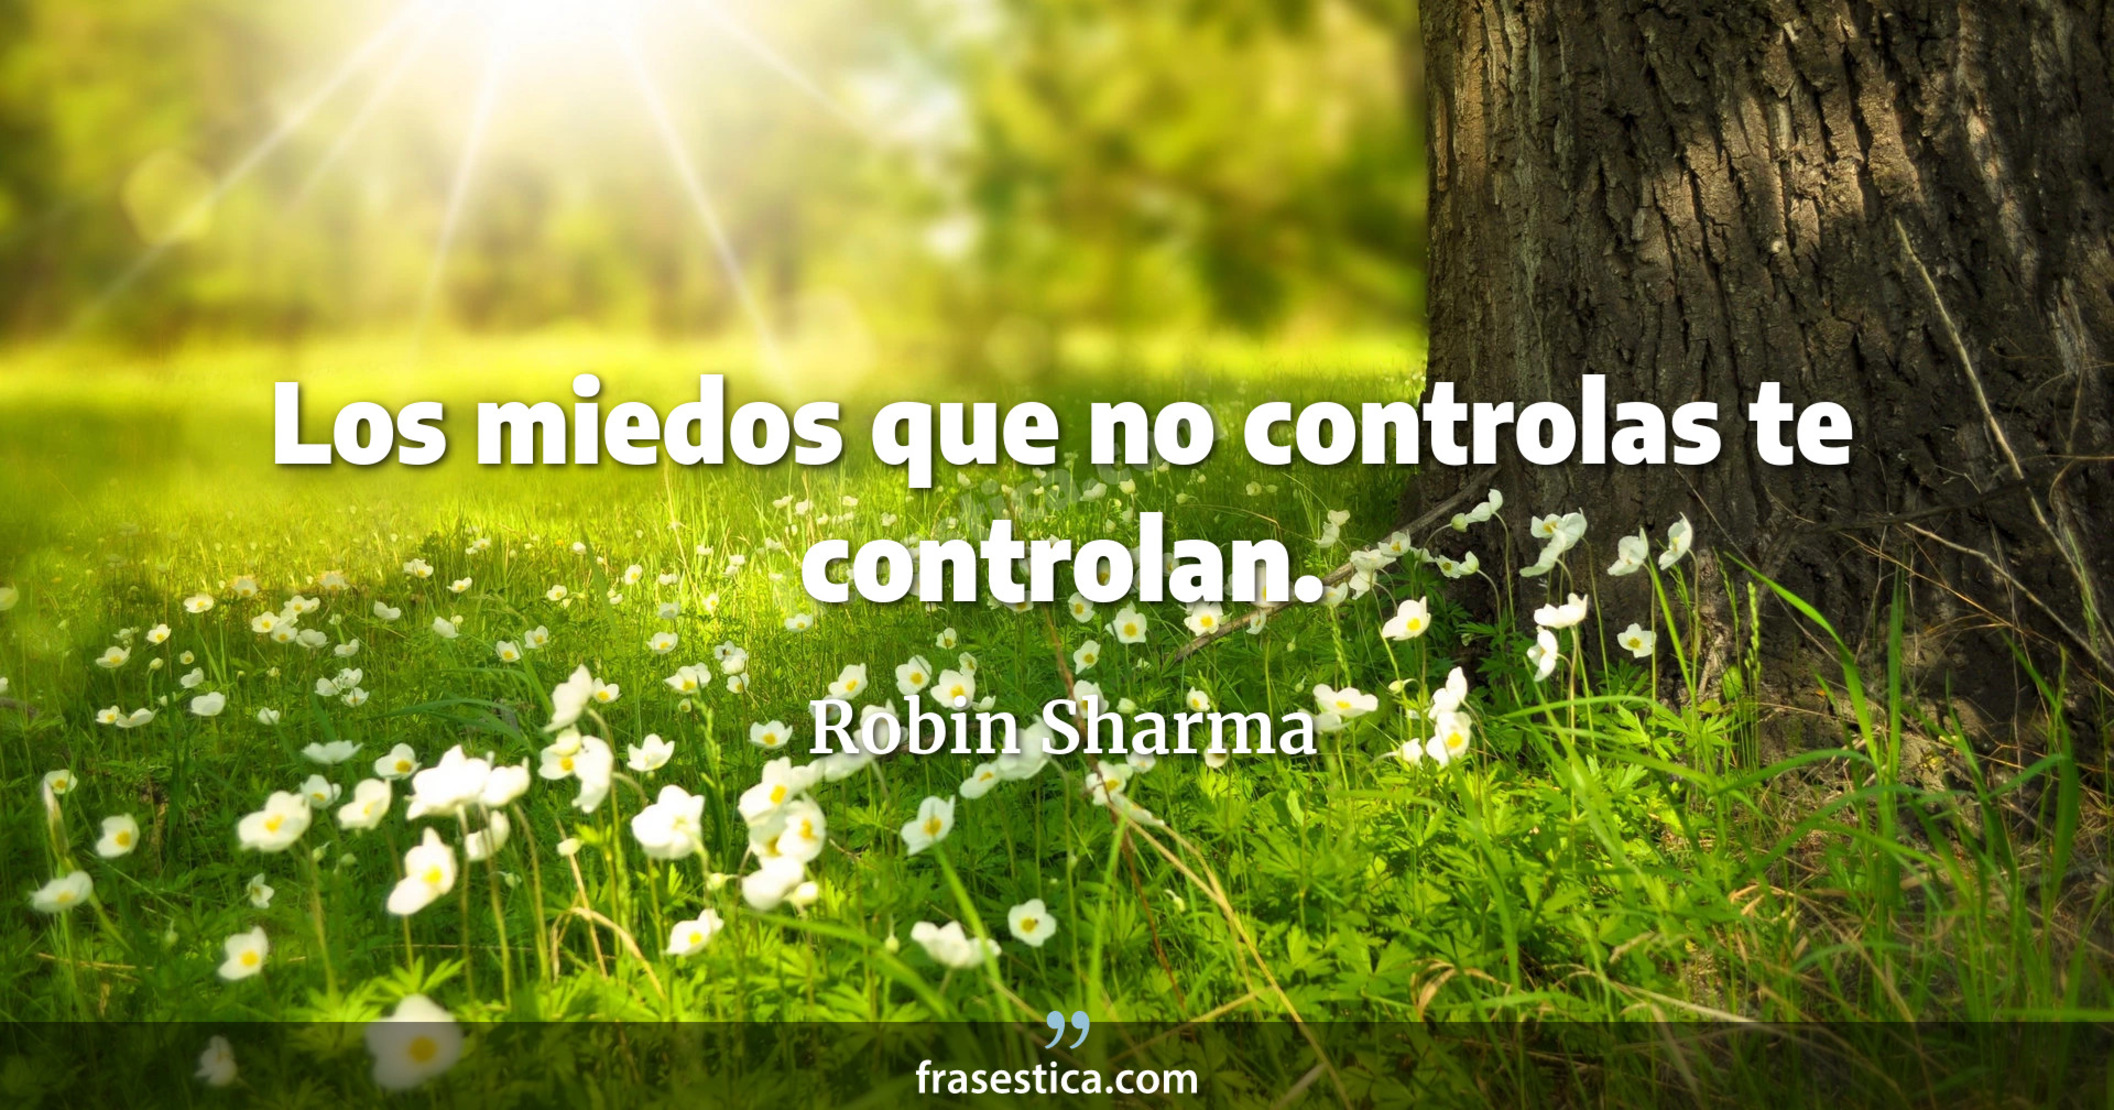 Los miedos que no controlas te controlan. - Robin Sharma